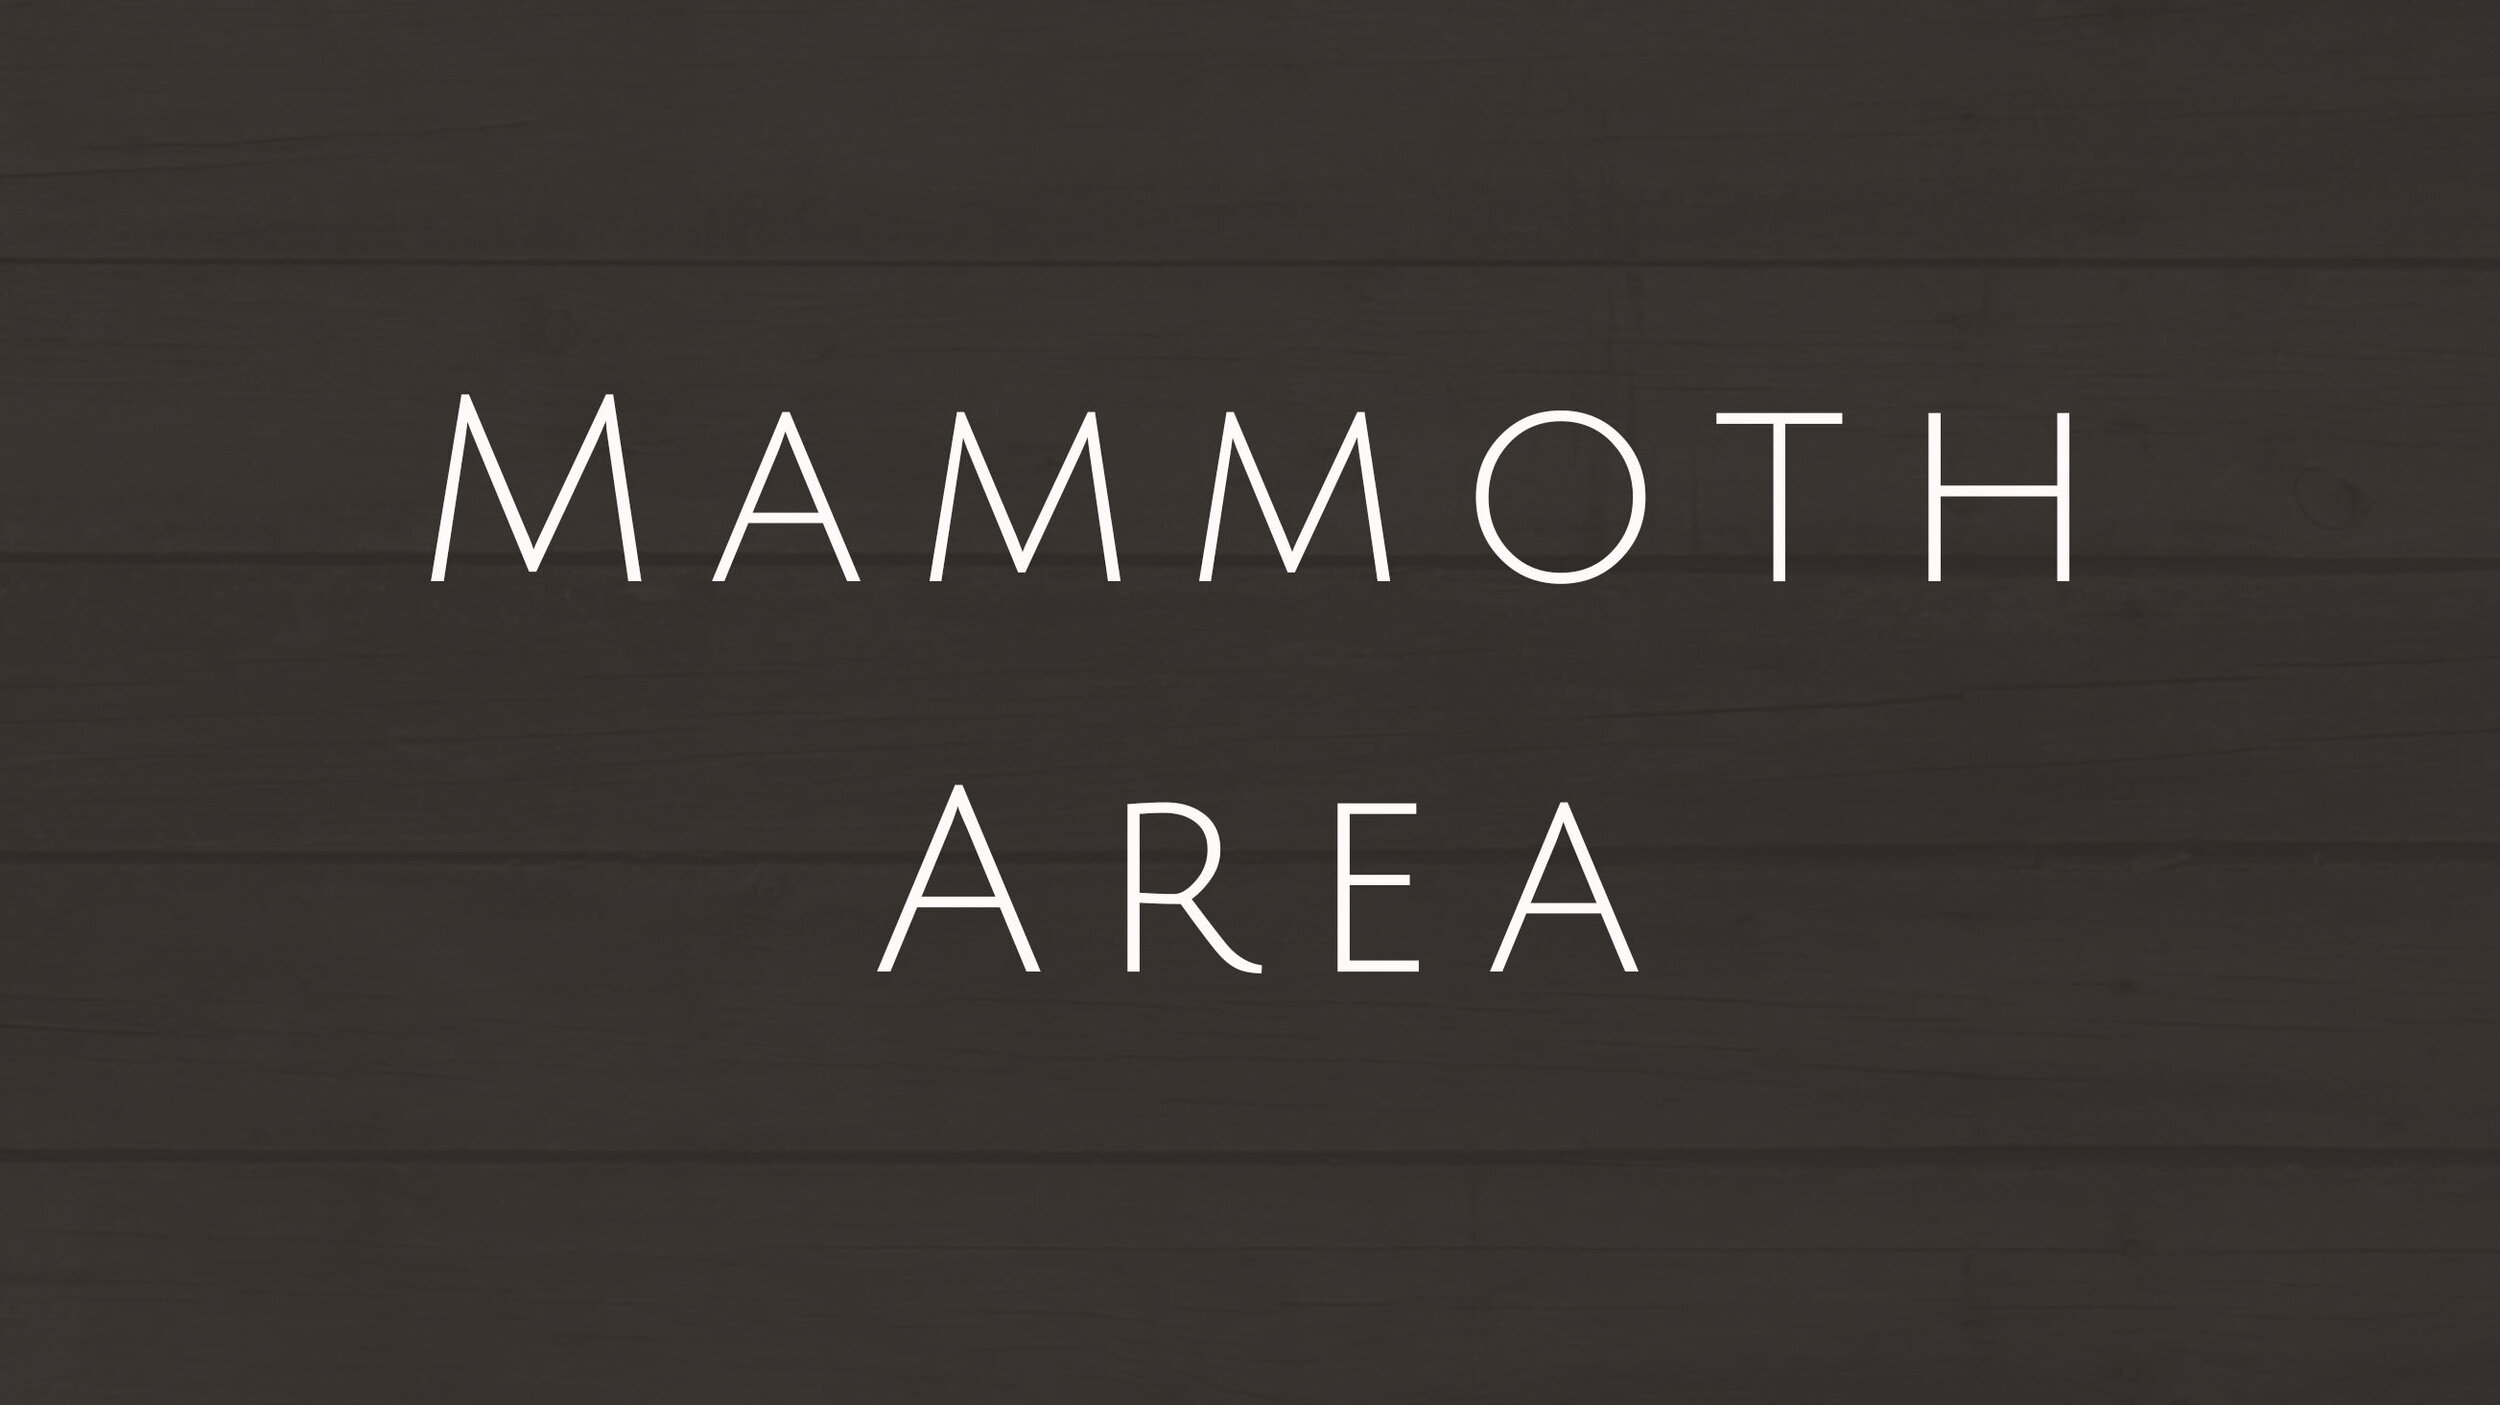 Mammoth Area 16x9.jpg